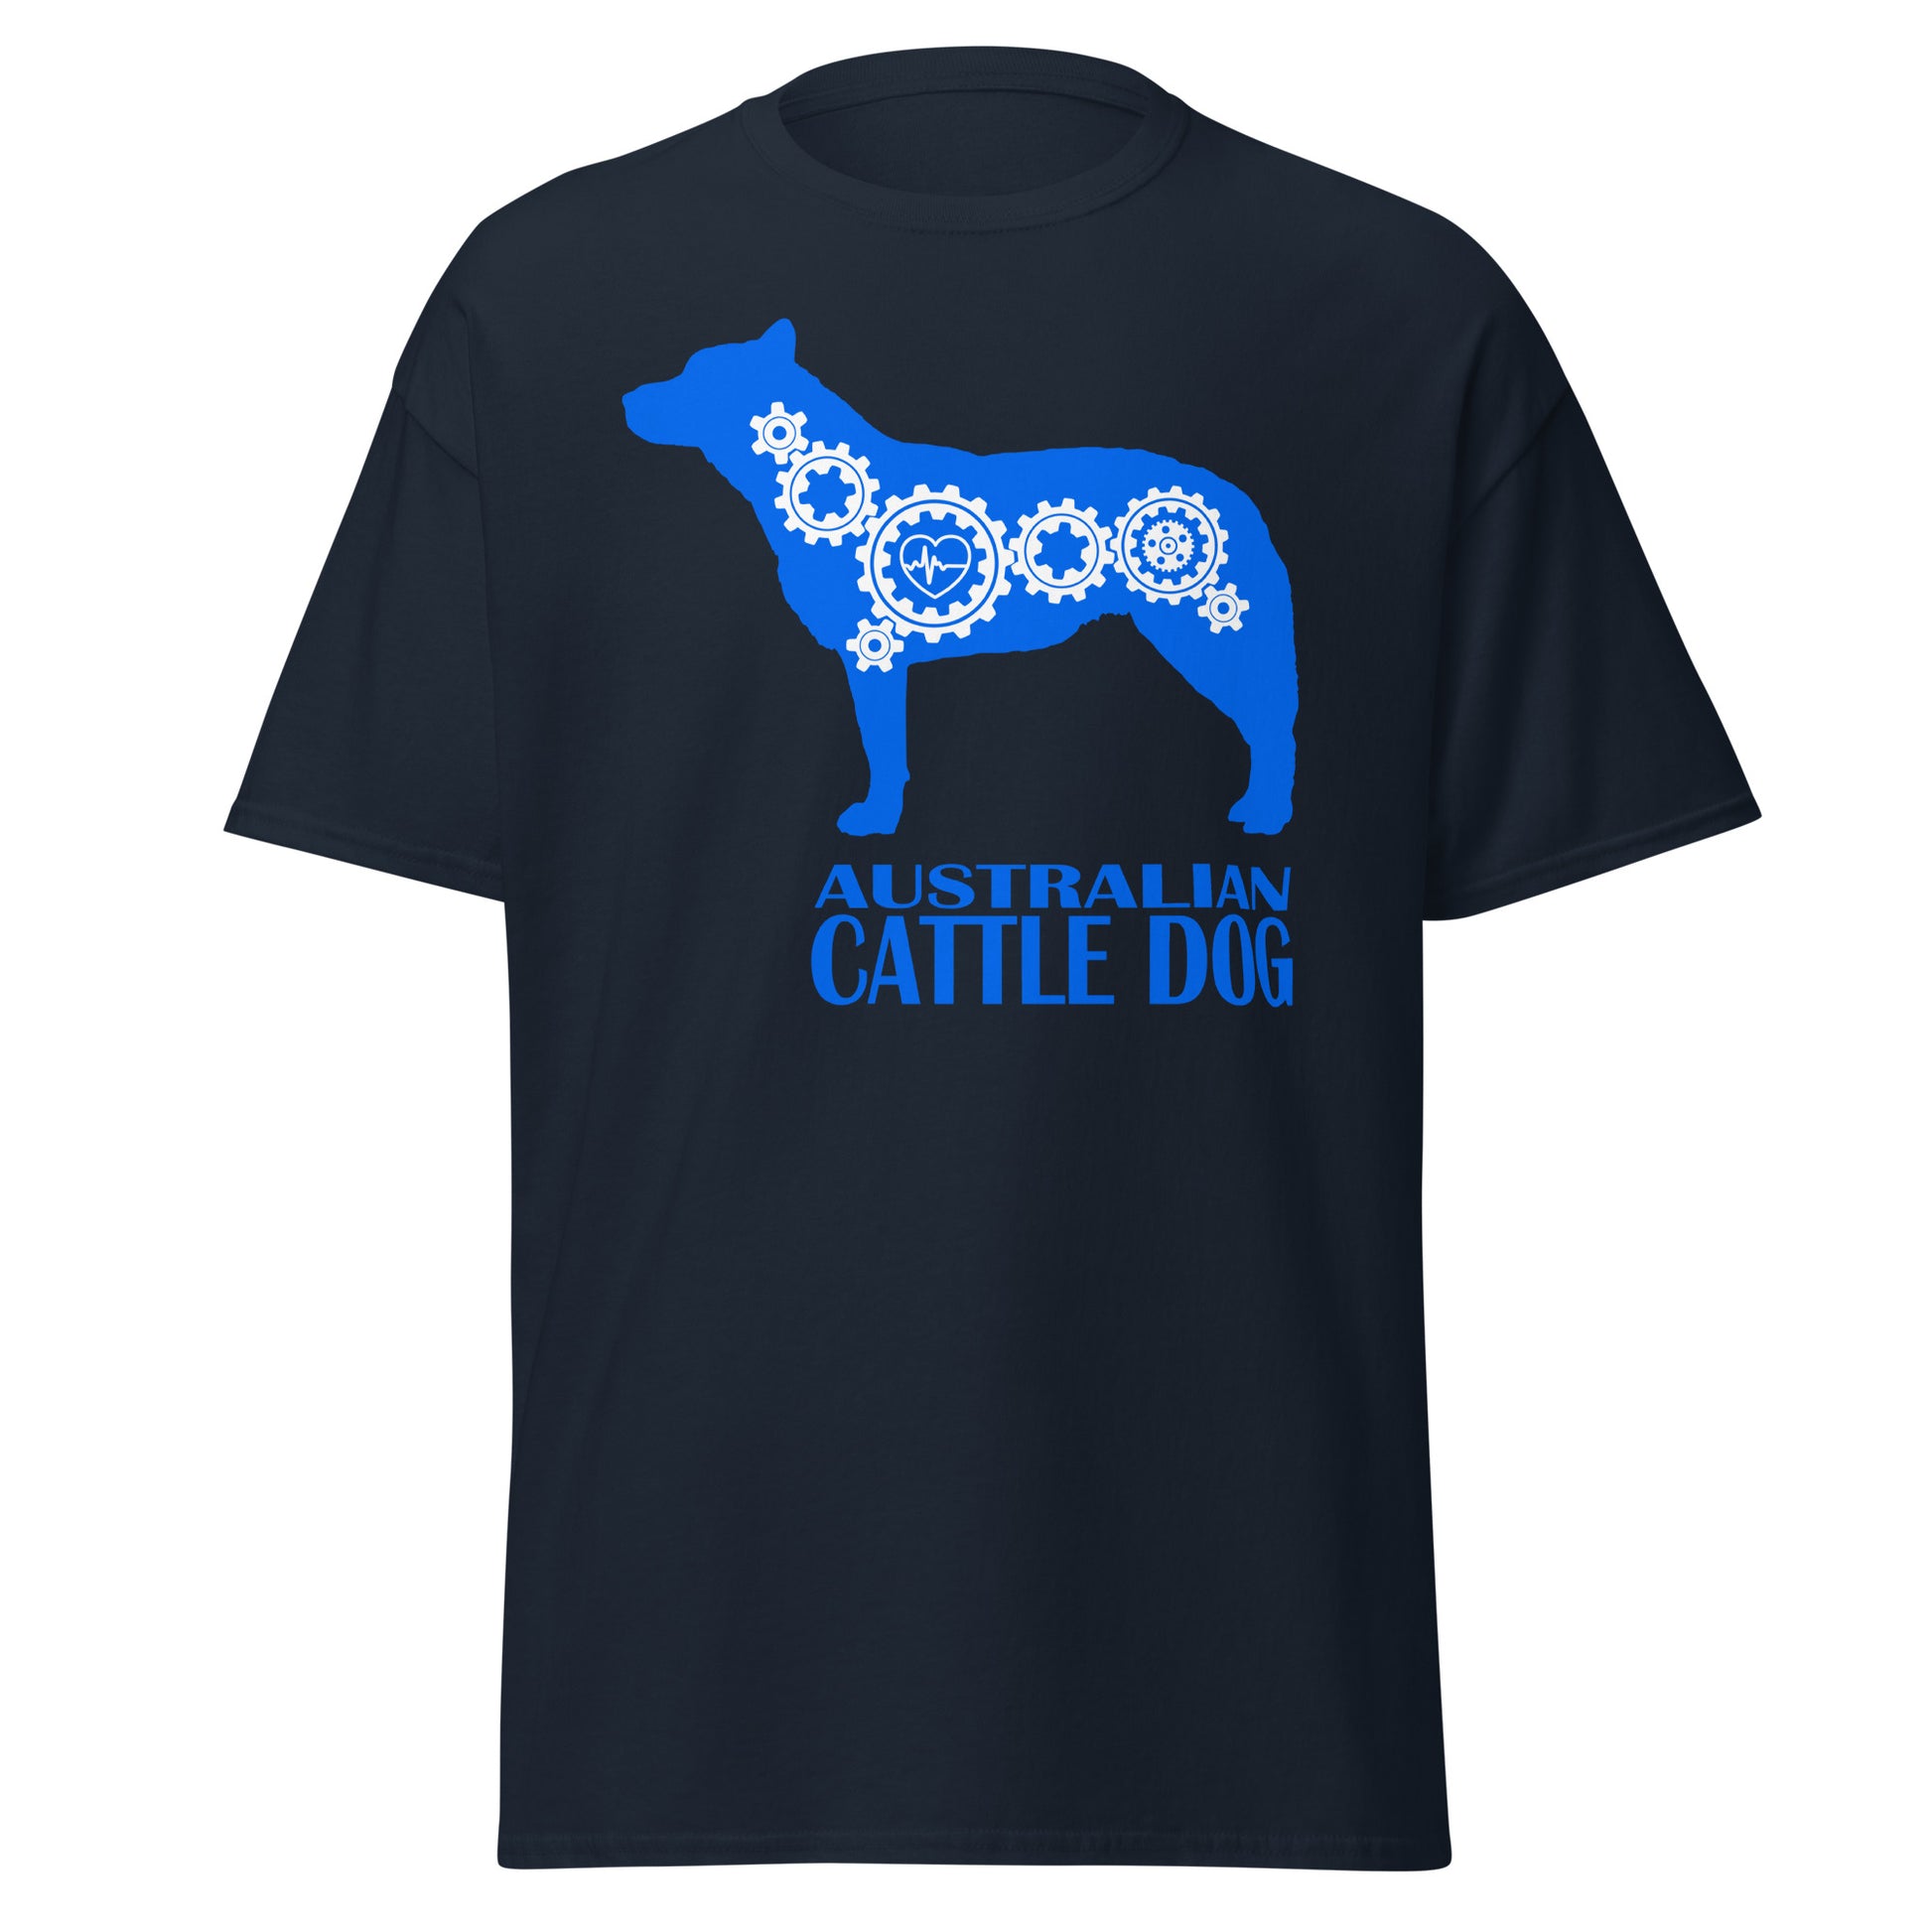 Australian Cattle Dog Bionic men’s navy t-shirt by Dog Artistry.